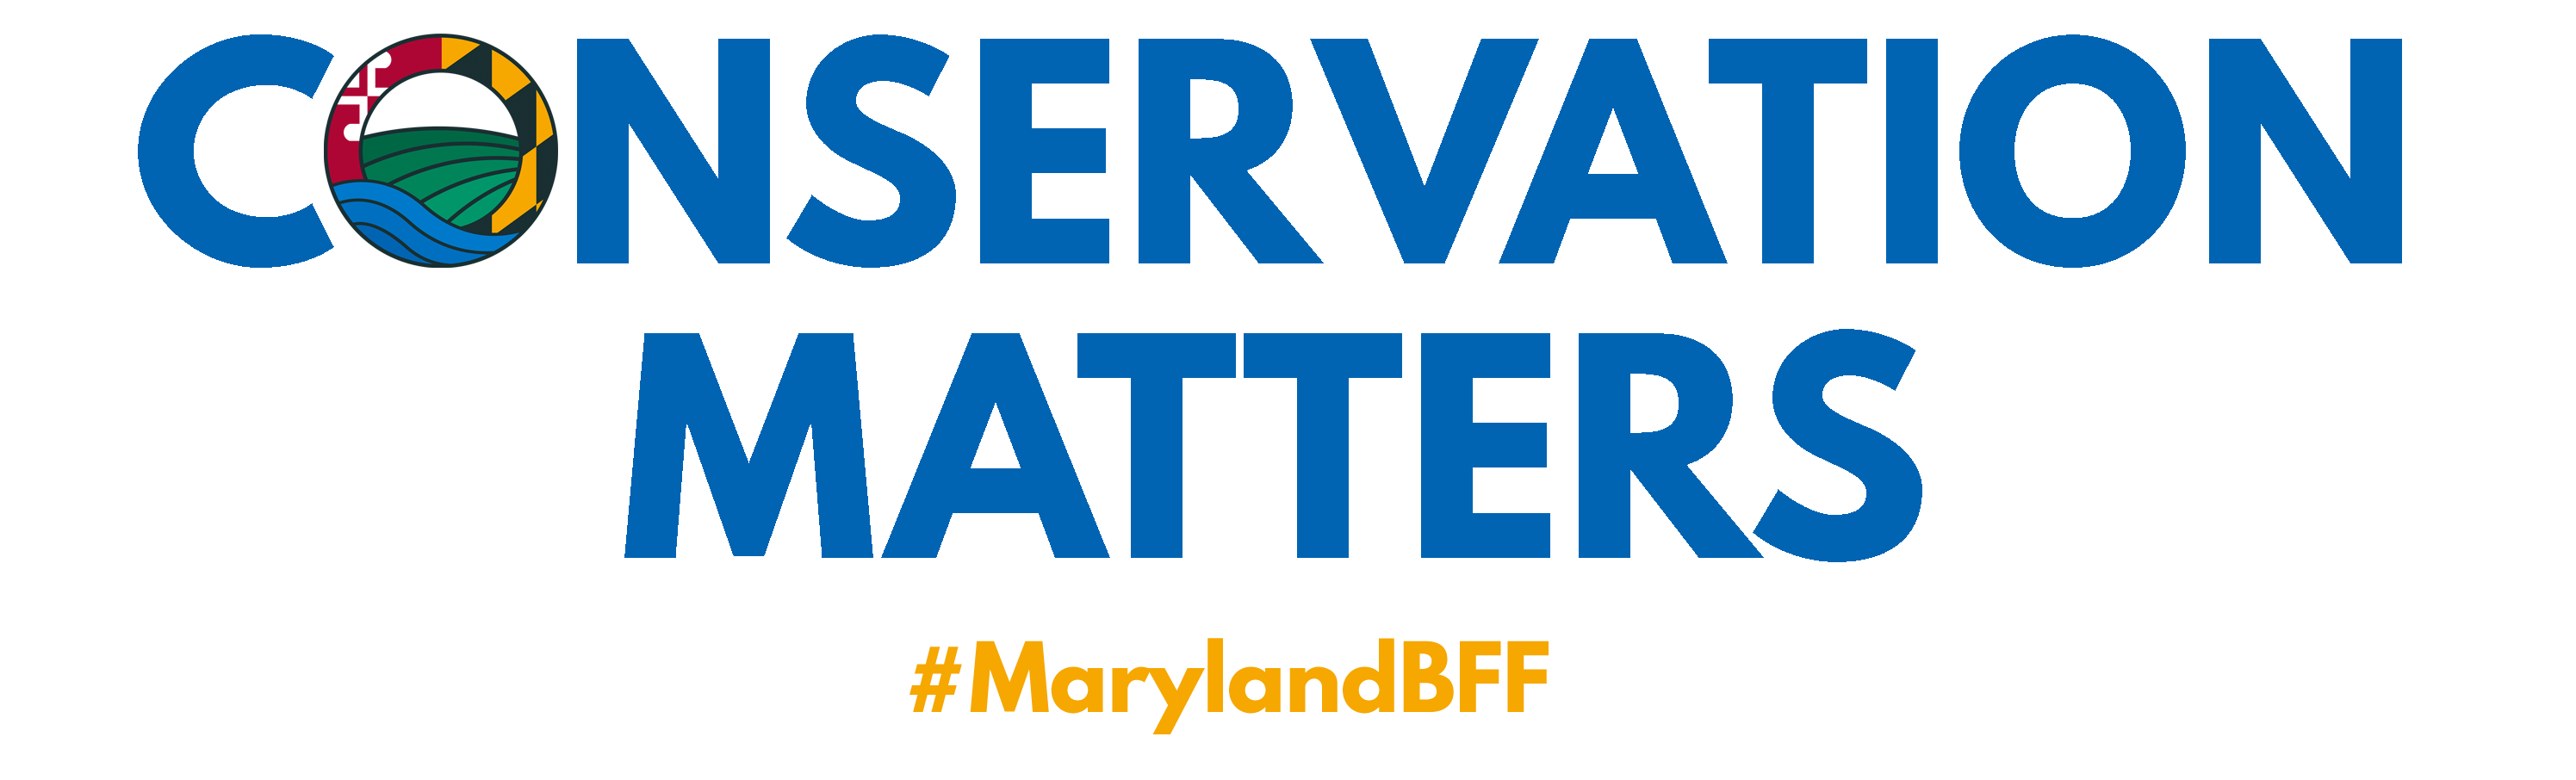 Conservation matters #MarylandBFF